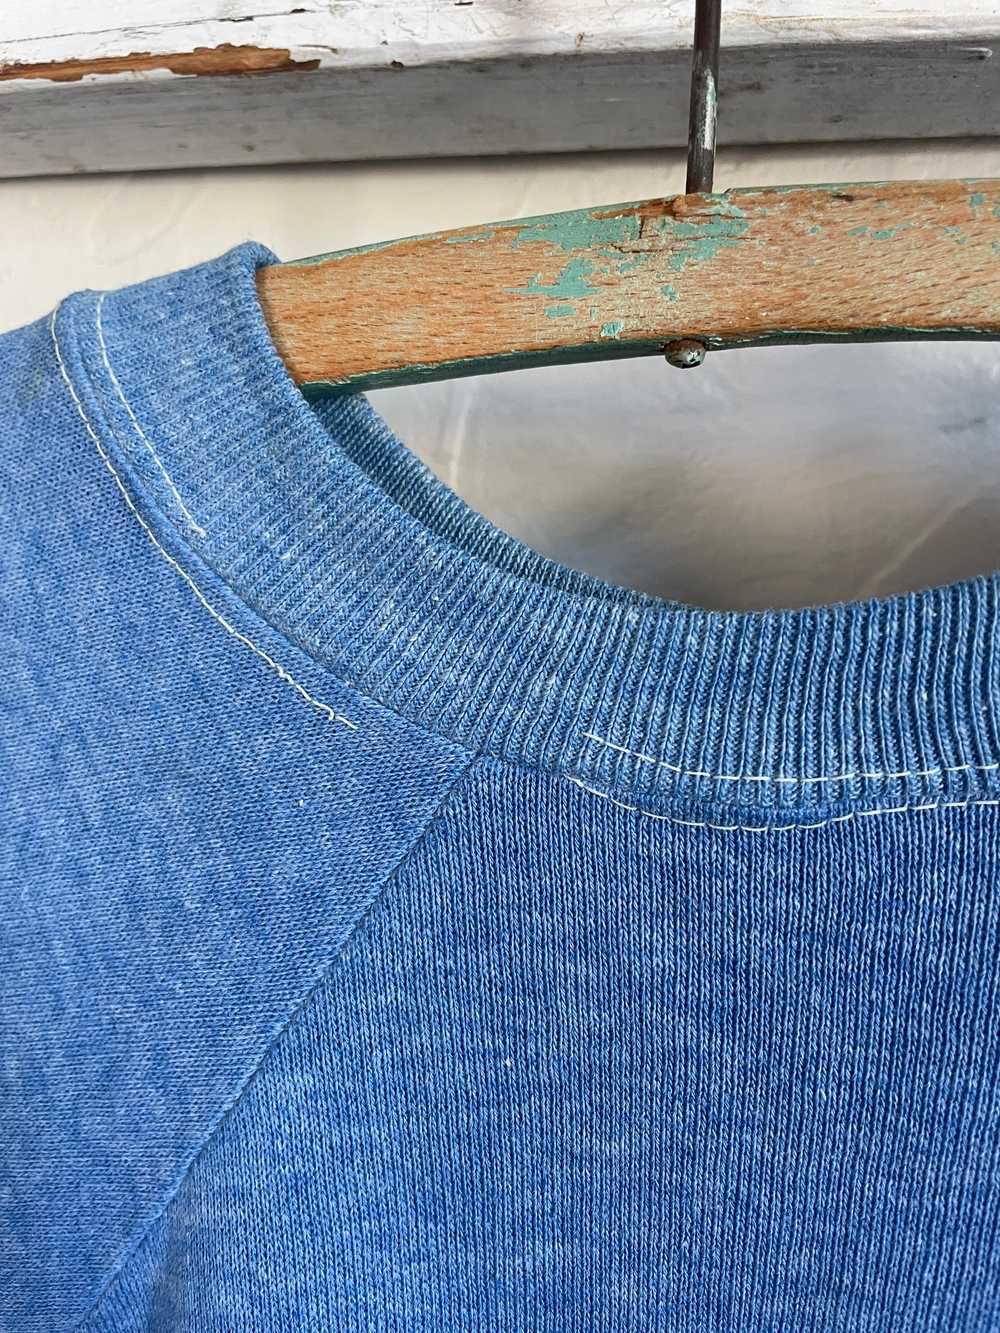 70s/80s Blank Blue Sweatshirt - image 5